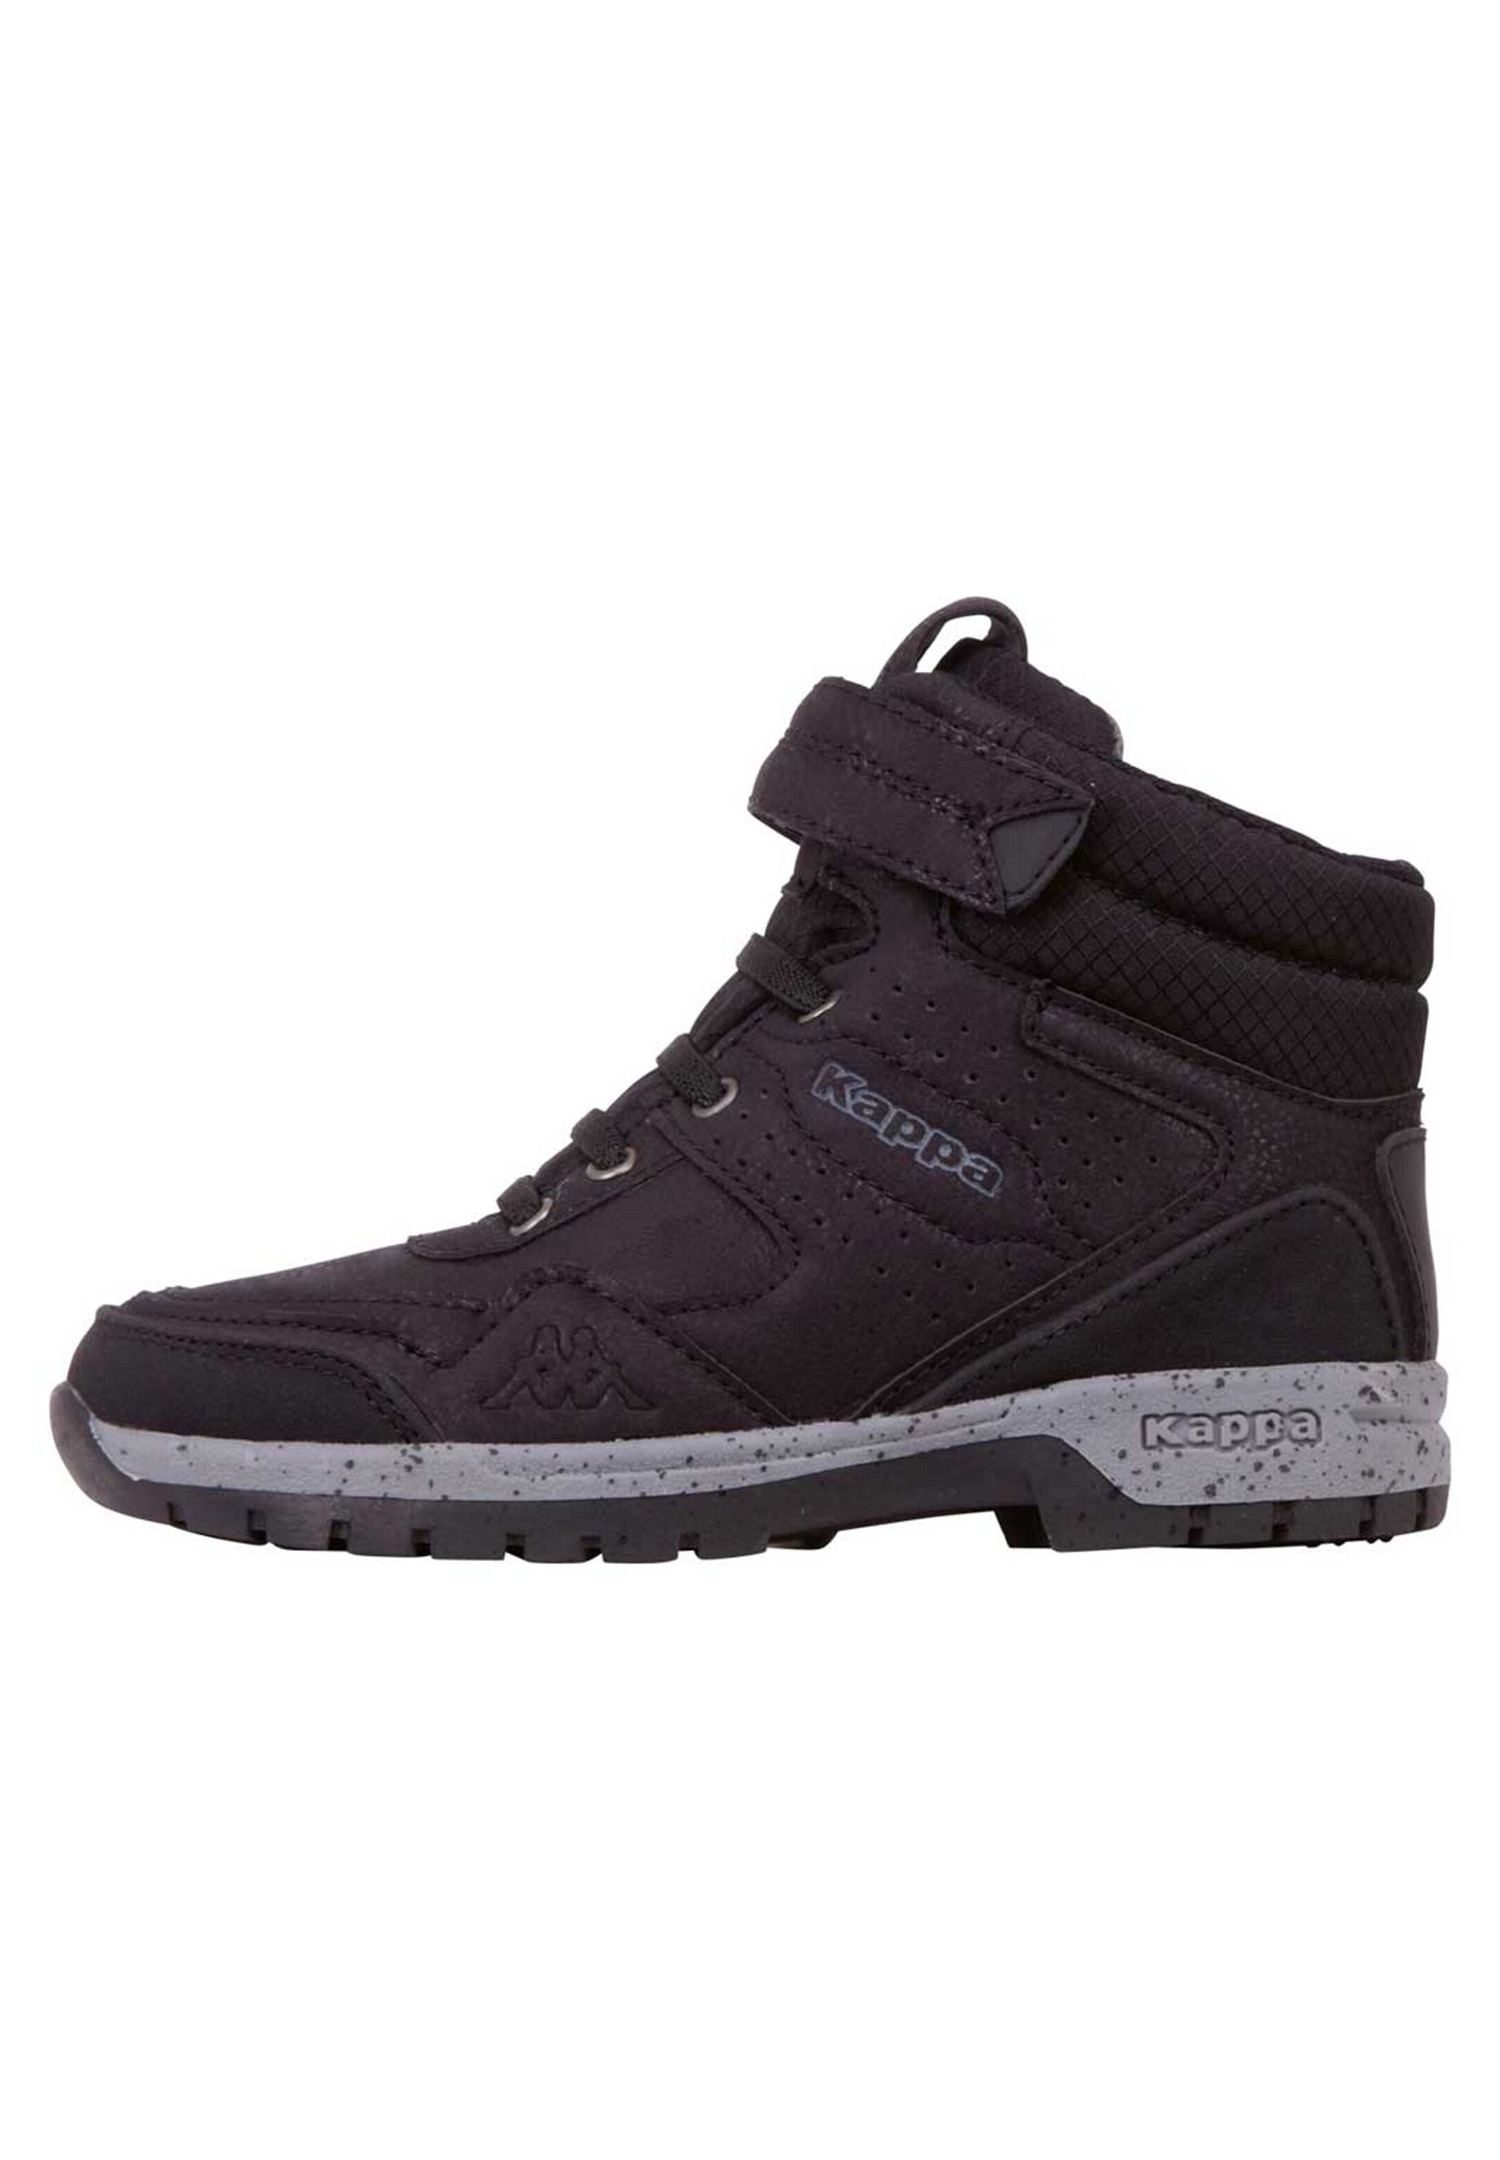 Kappa Unisex Kinder Sneaker High Top Stylecode 260732T 1116 schwarz